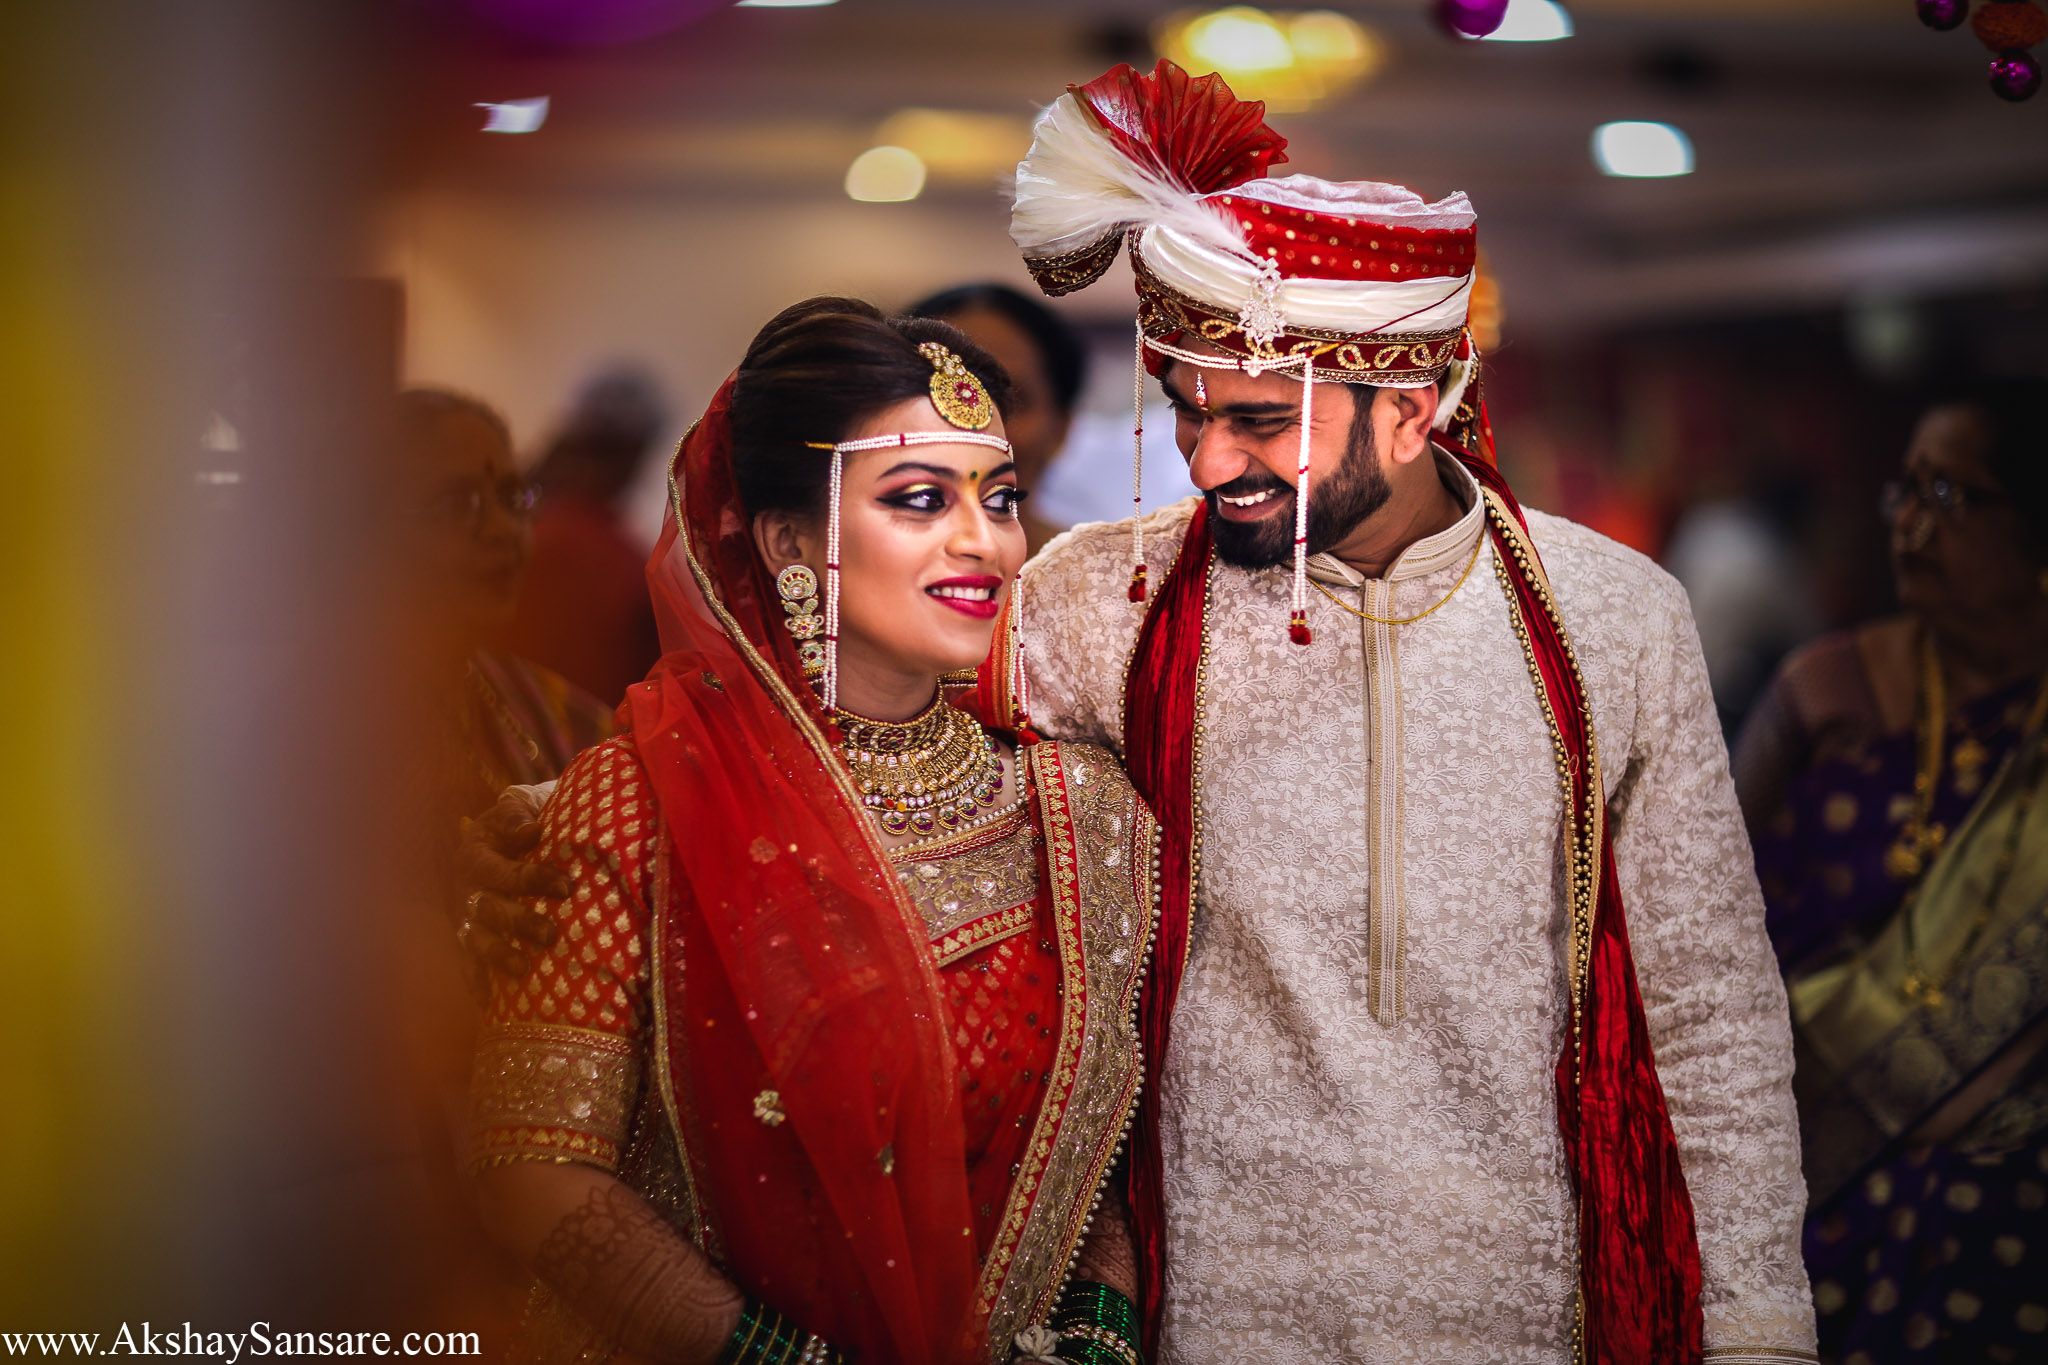 Ajay & Devika Akshay Sansare Photography Best Candid wedding photographer in mumbai india3.jpg